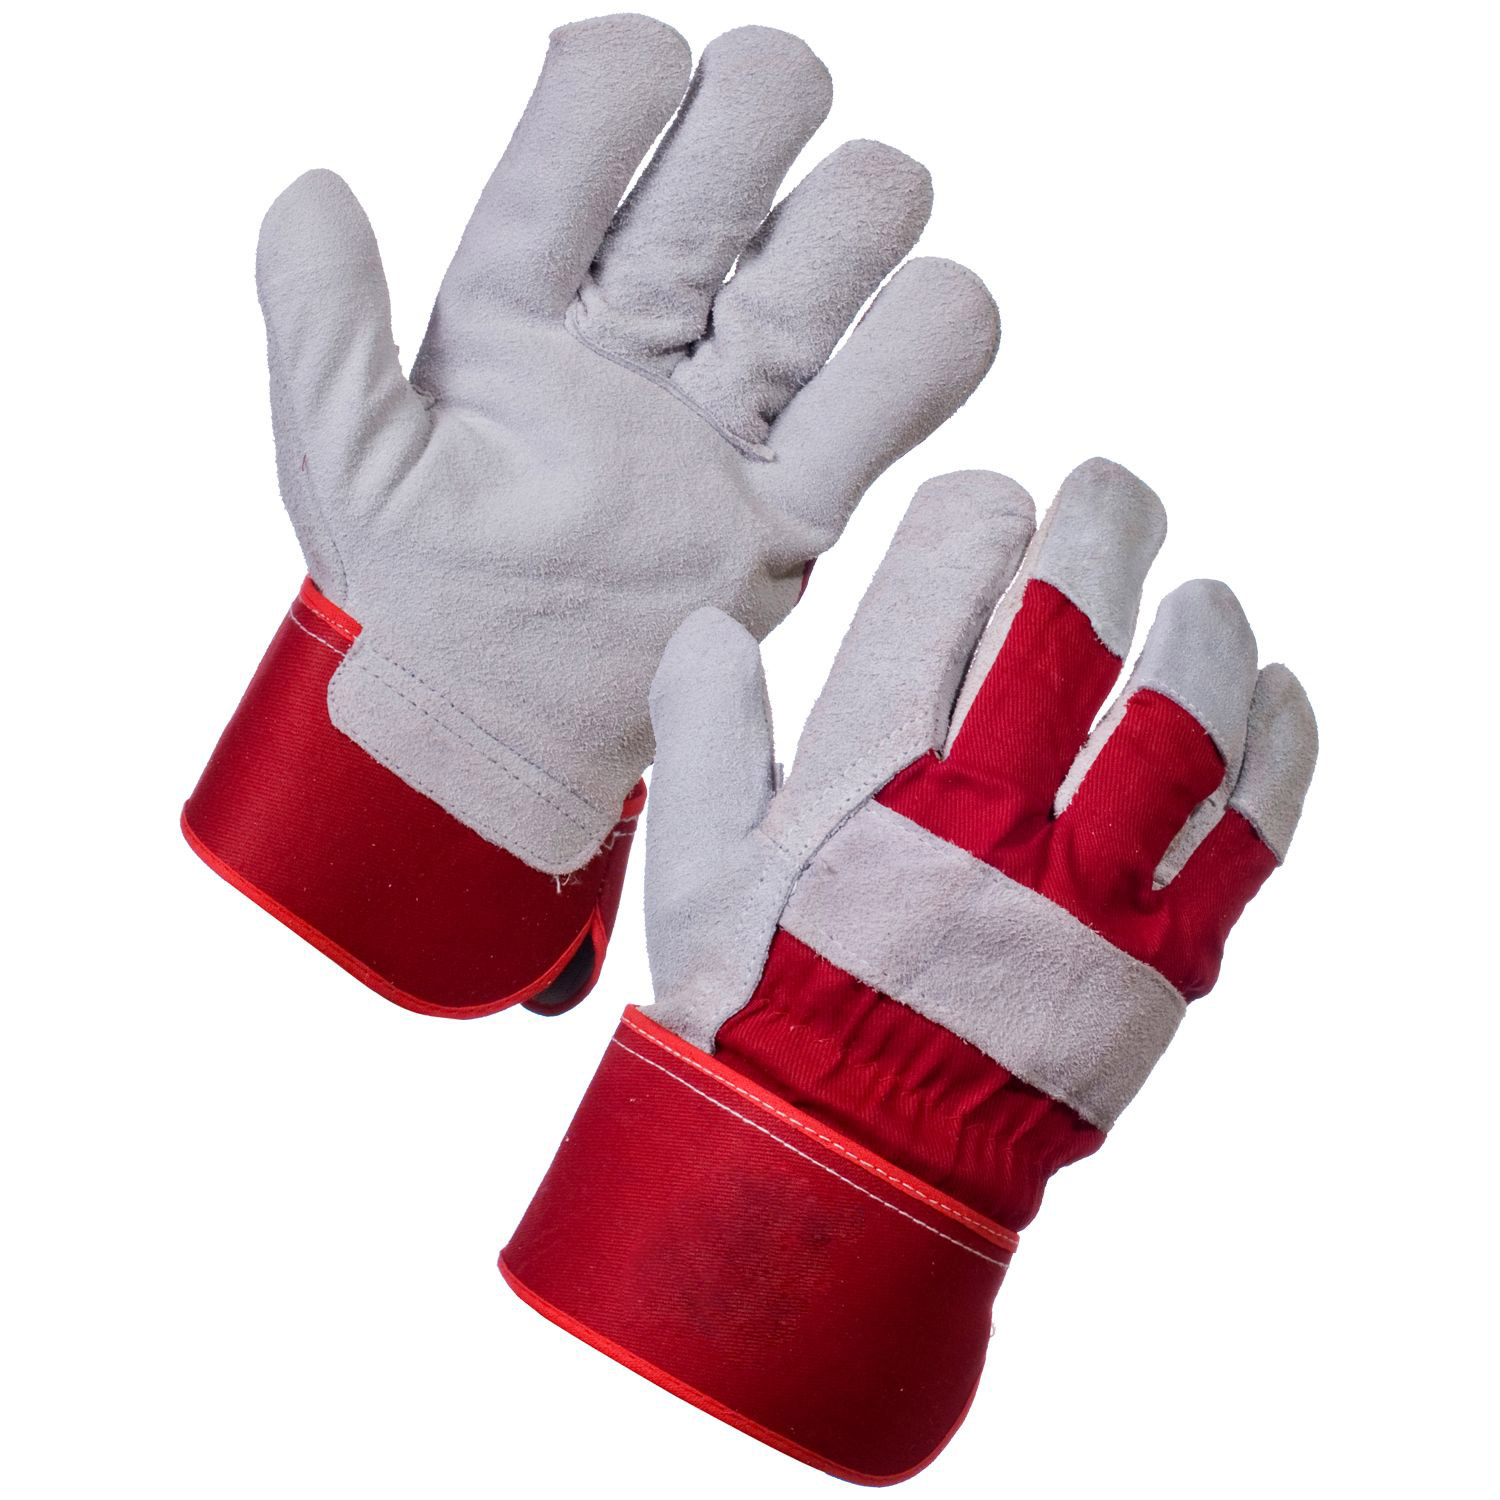 Heavyweight Elite Work Rigger Gloves with Fleece Palm Liner